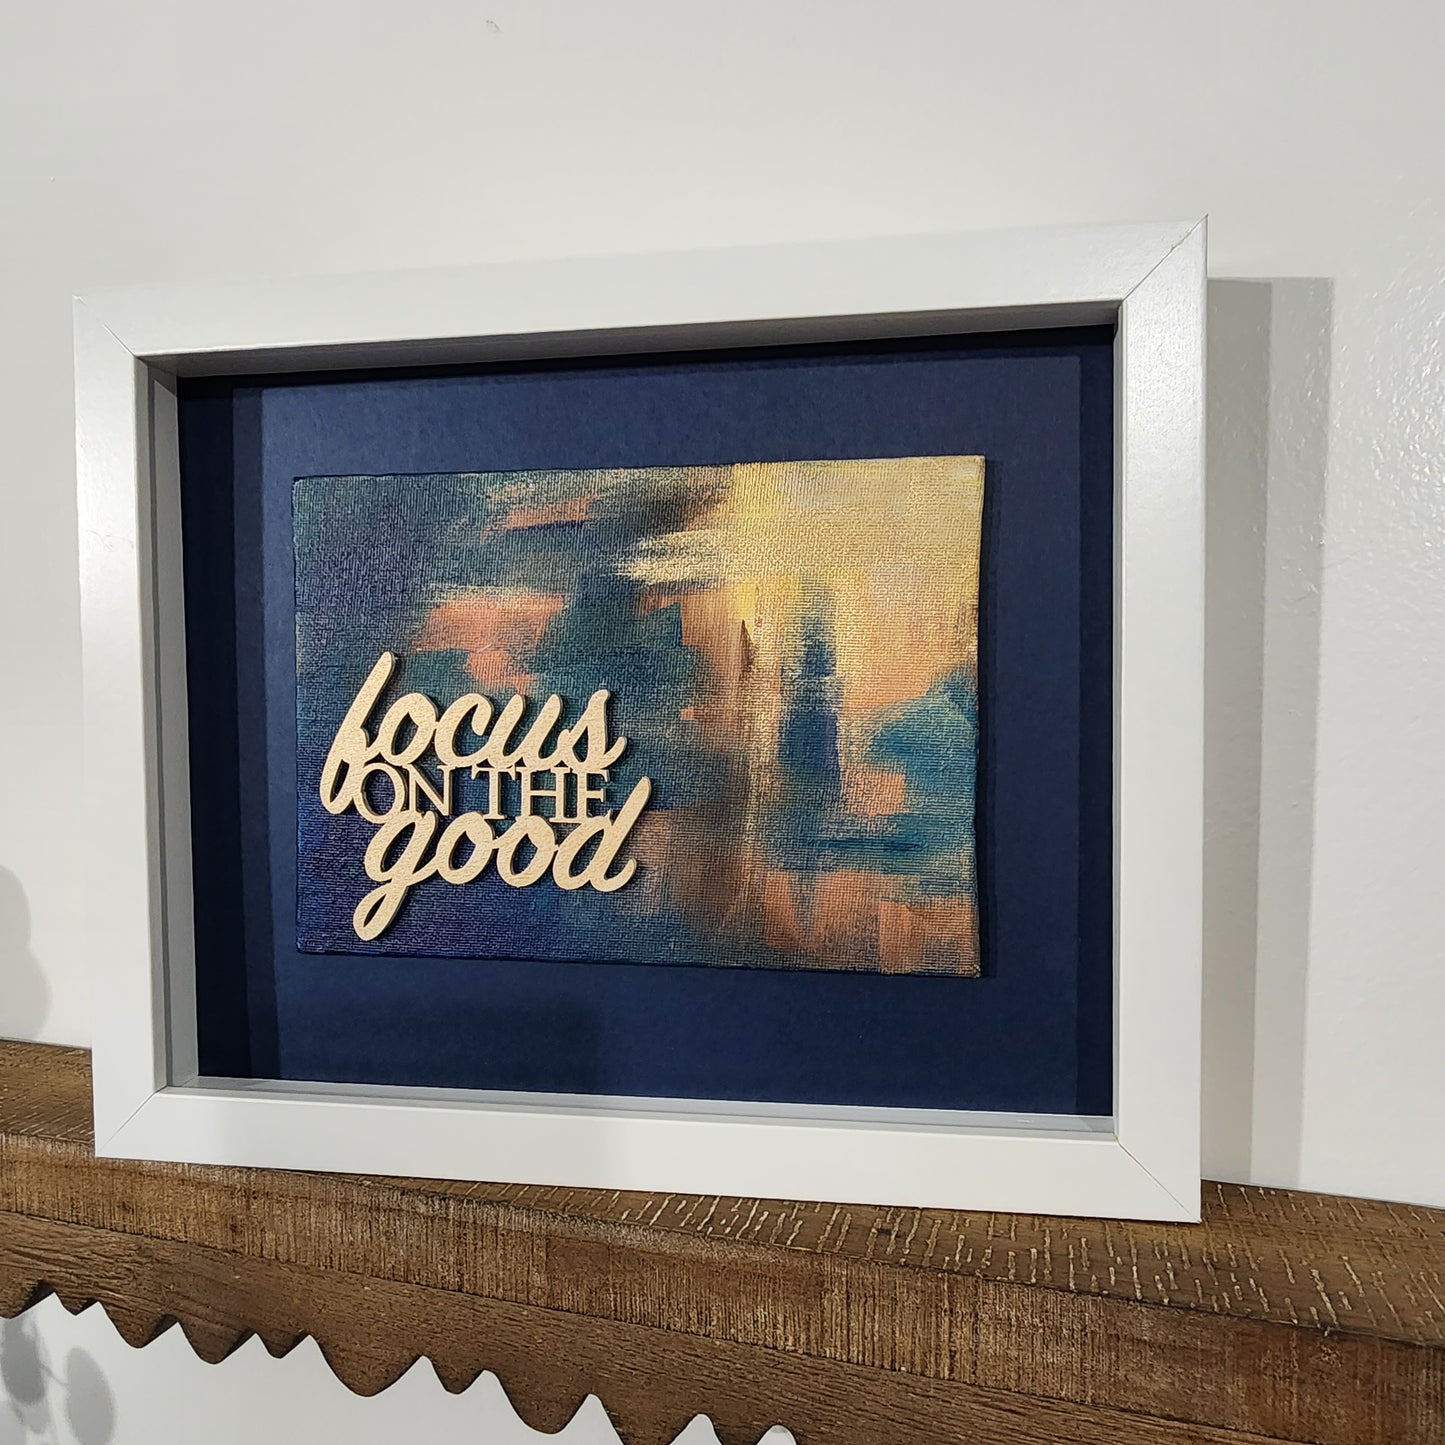 Focus On The Good Original WordArt Collage